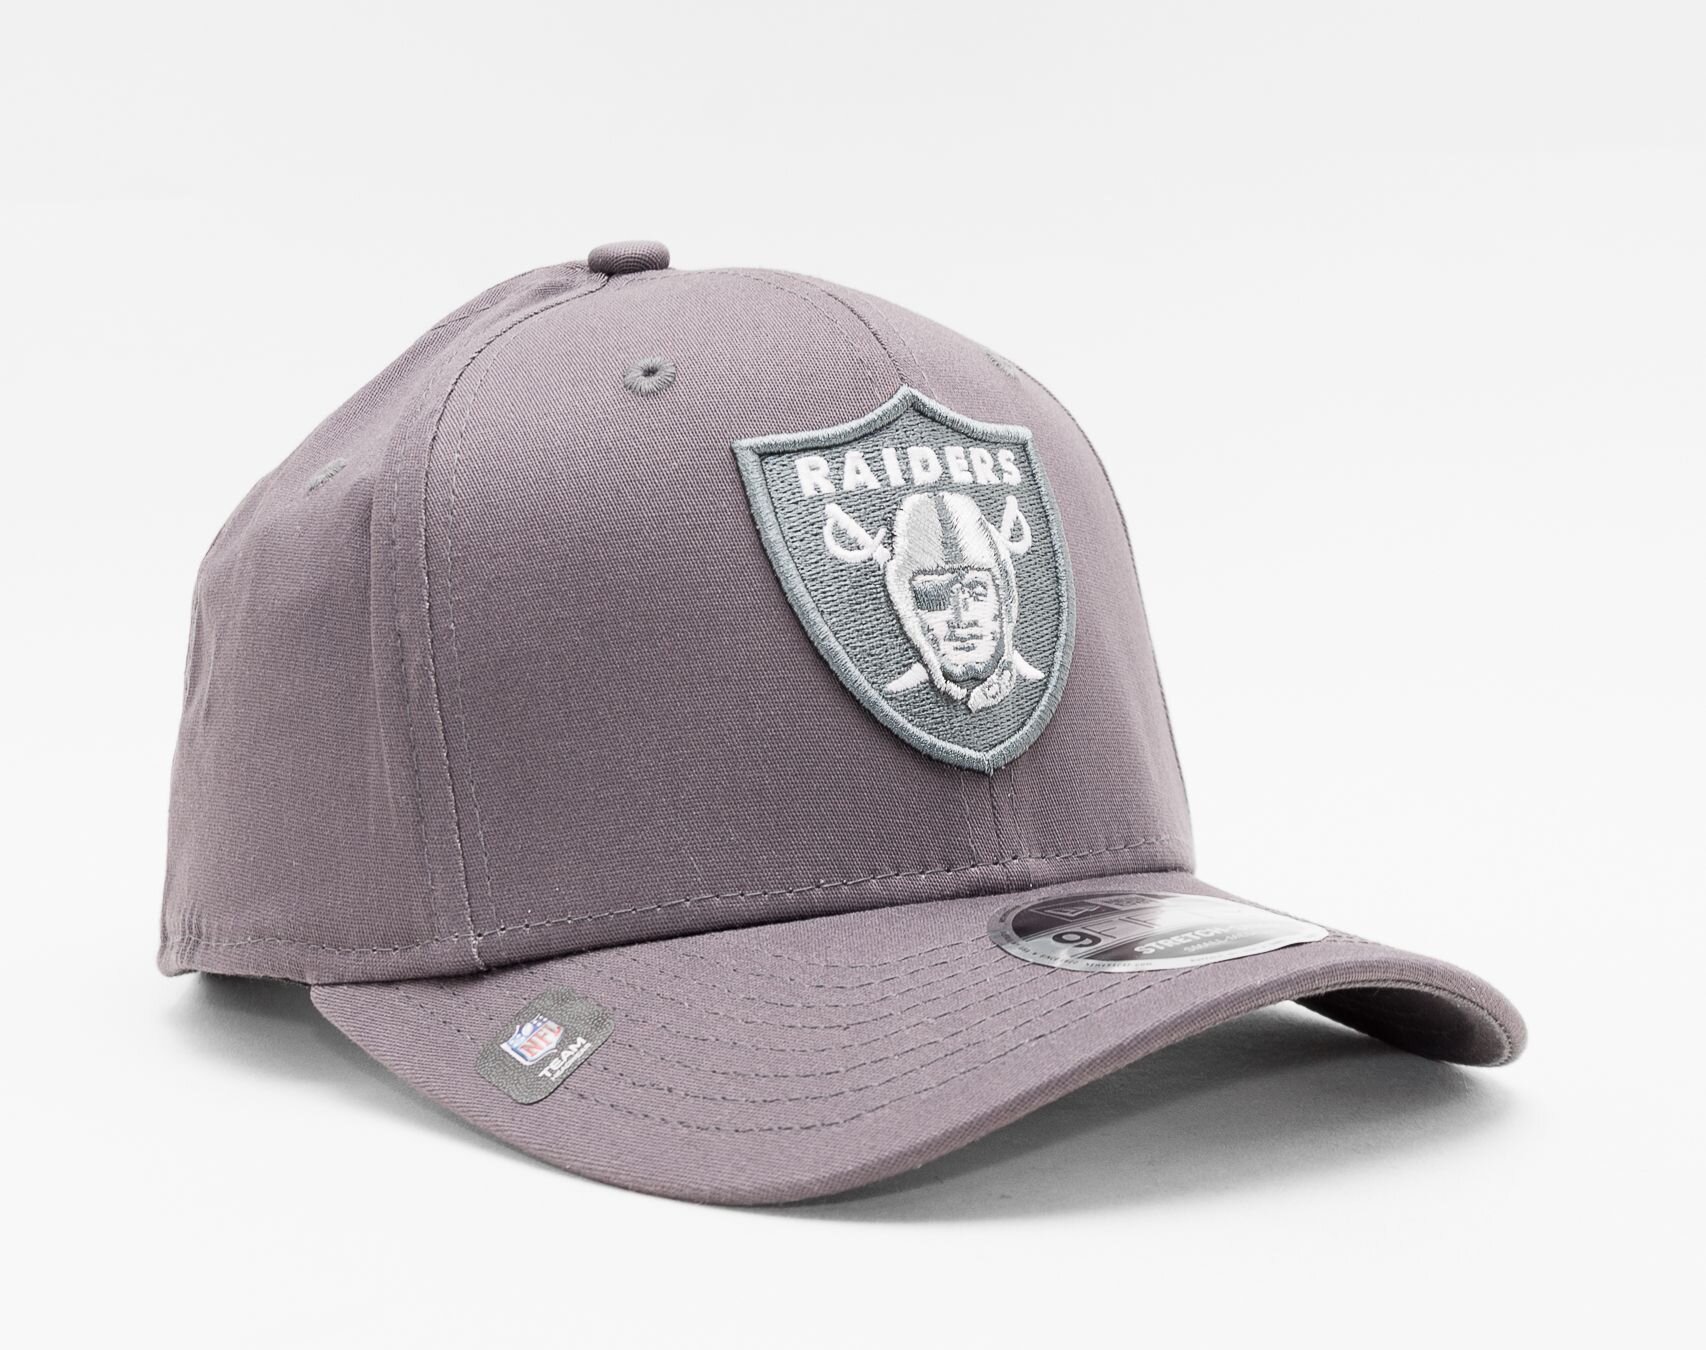 Oakland Raiders Beanie Hat Cap Adult One Size Olive Green New Era NFL  Military